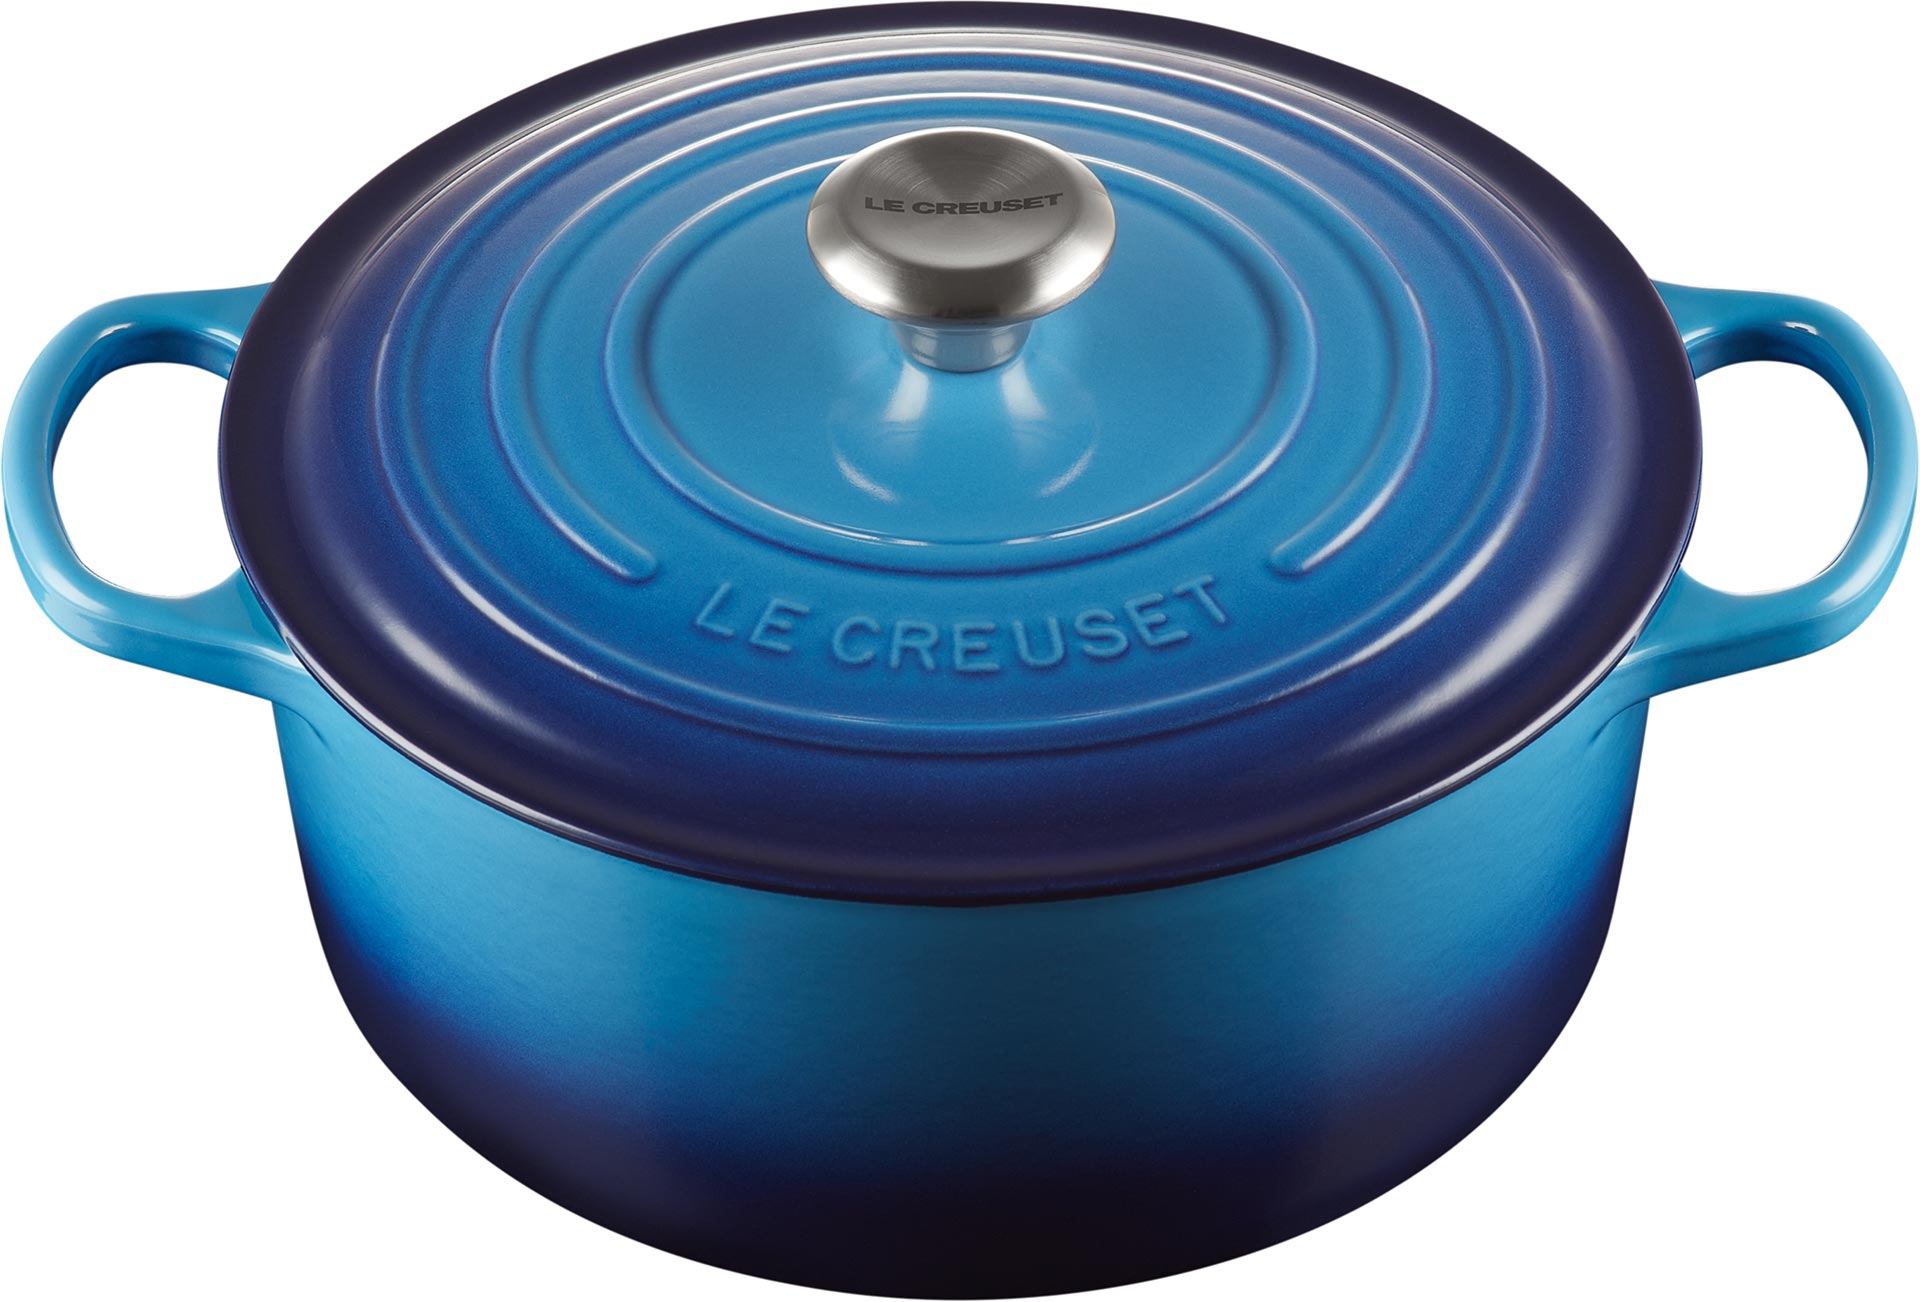 Le Creuset Signature Cast Iron Round Casserole French Oven